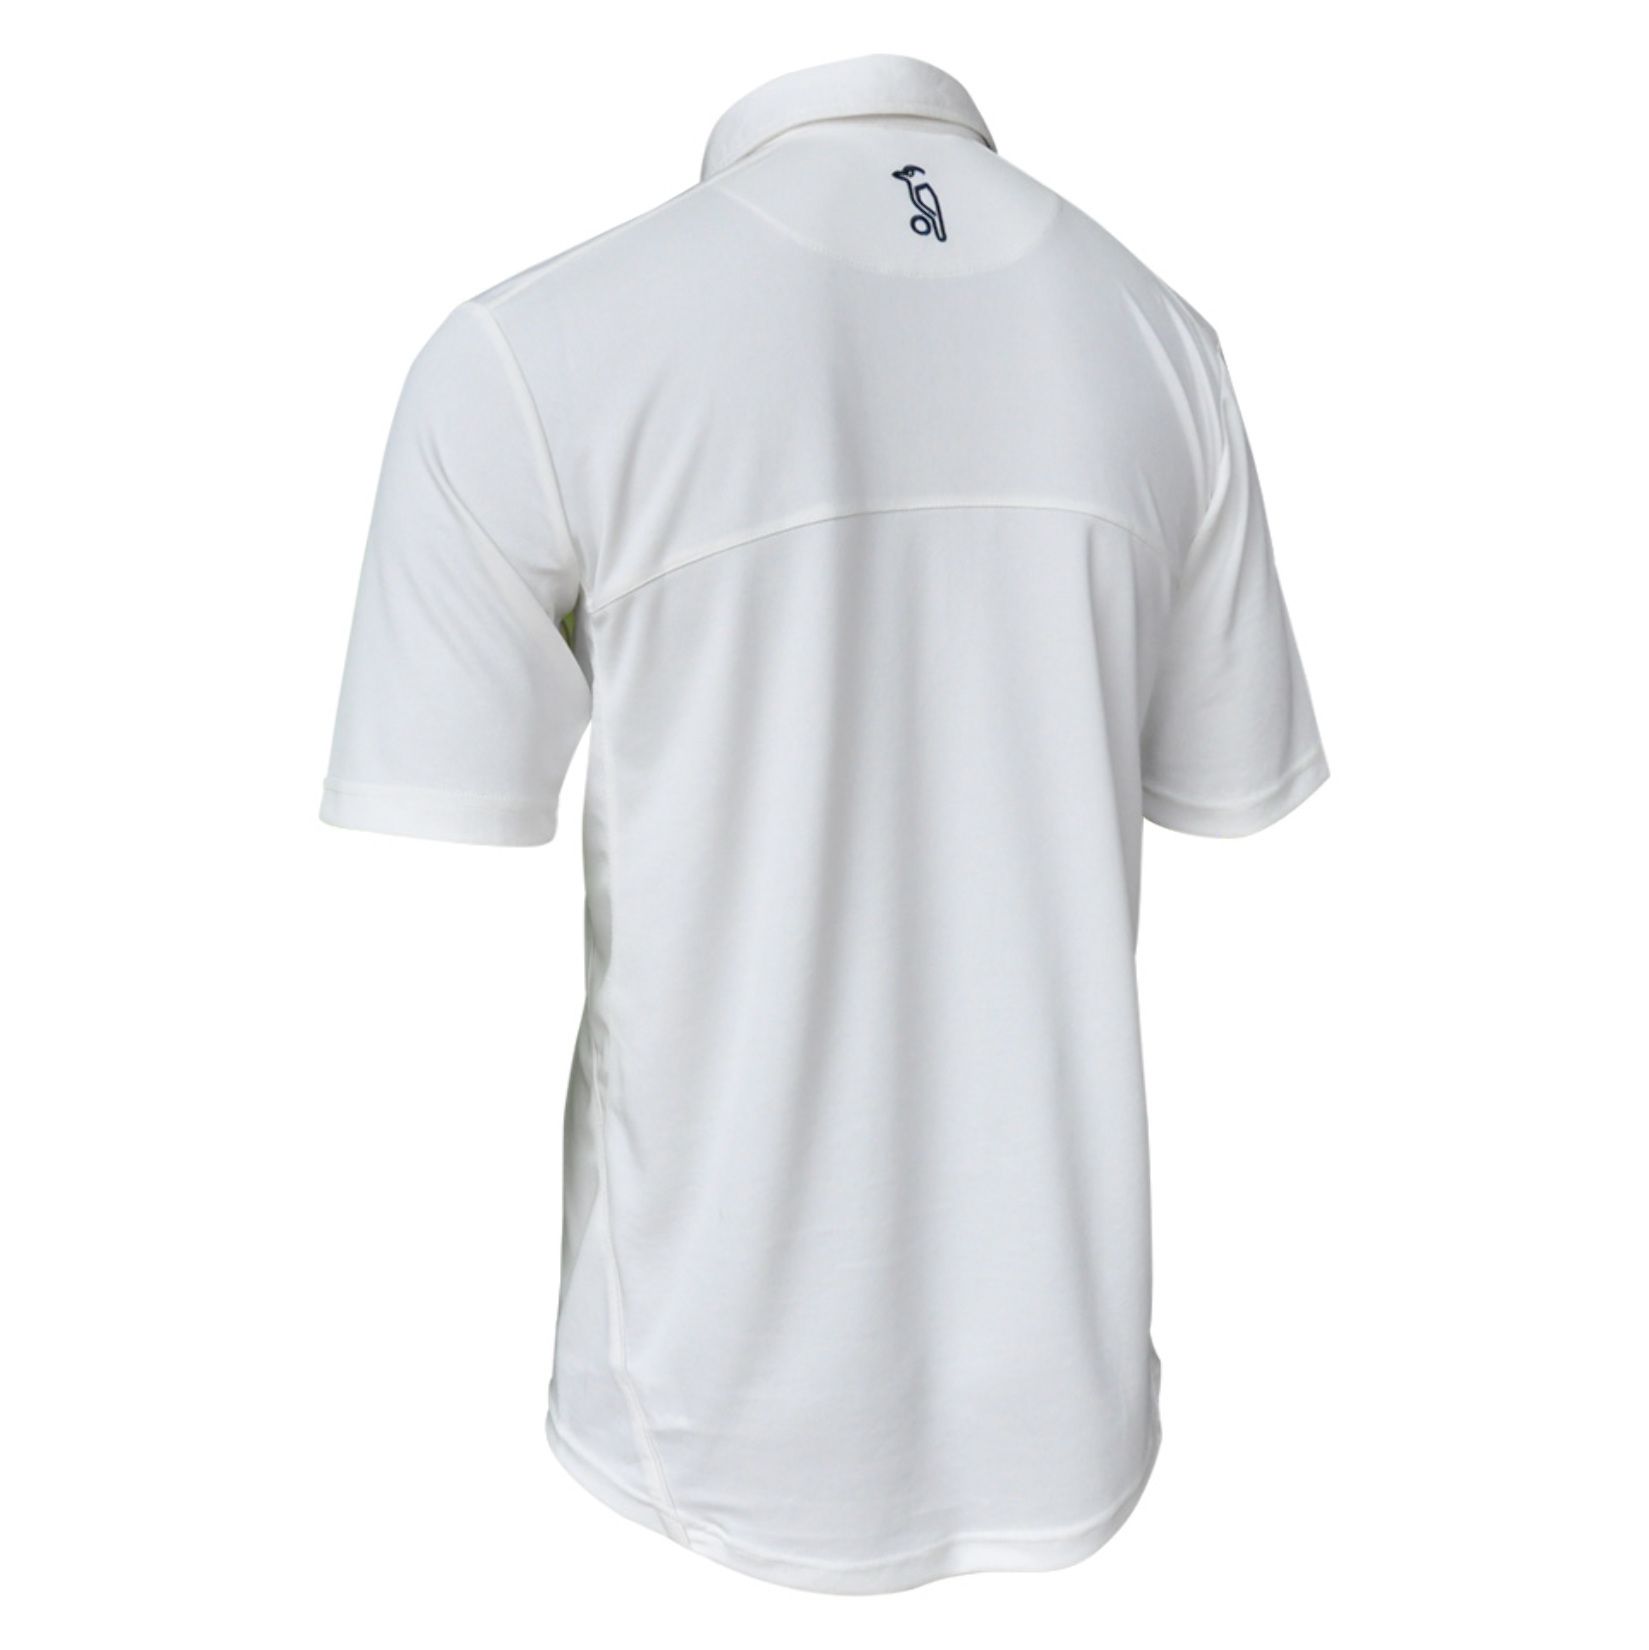 Kookaburra Pro Players Short Sleeve Shirt